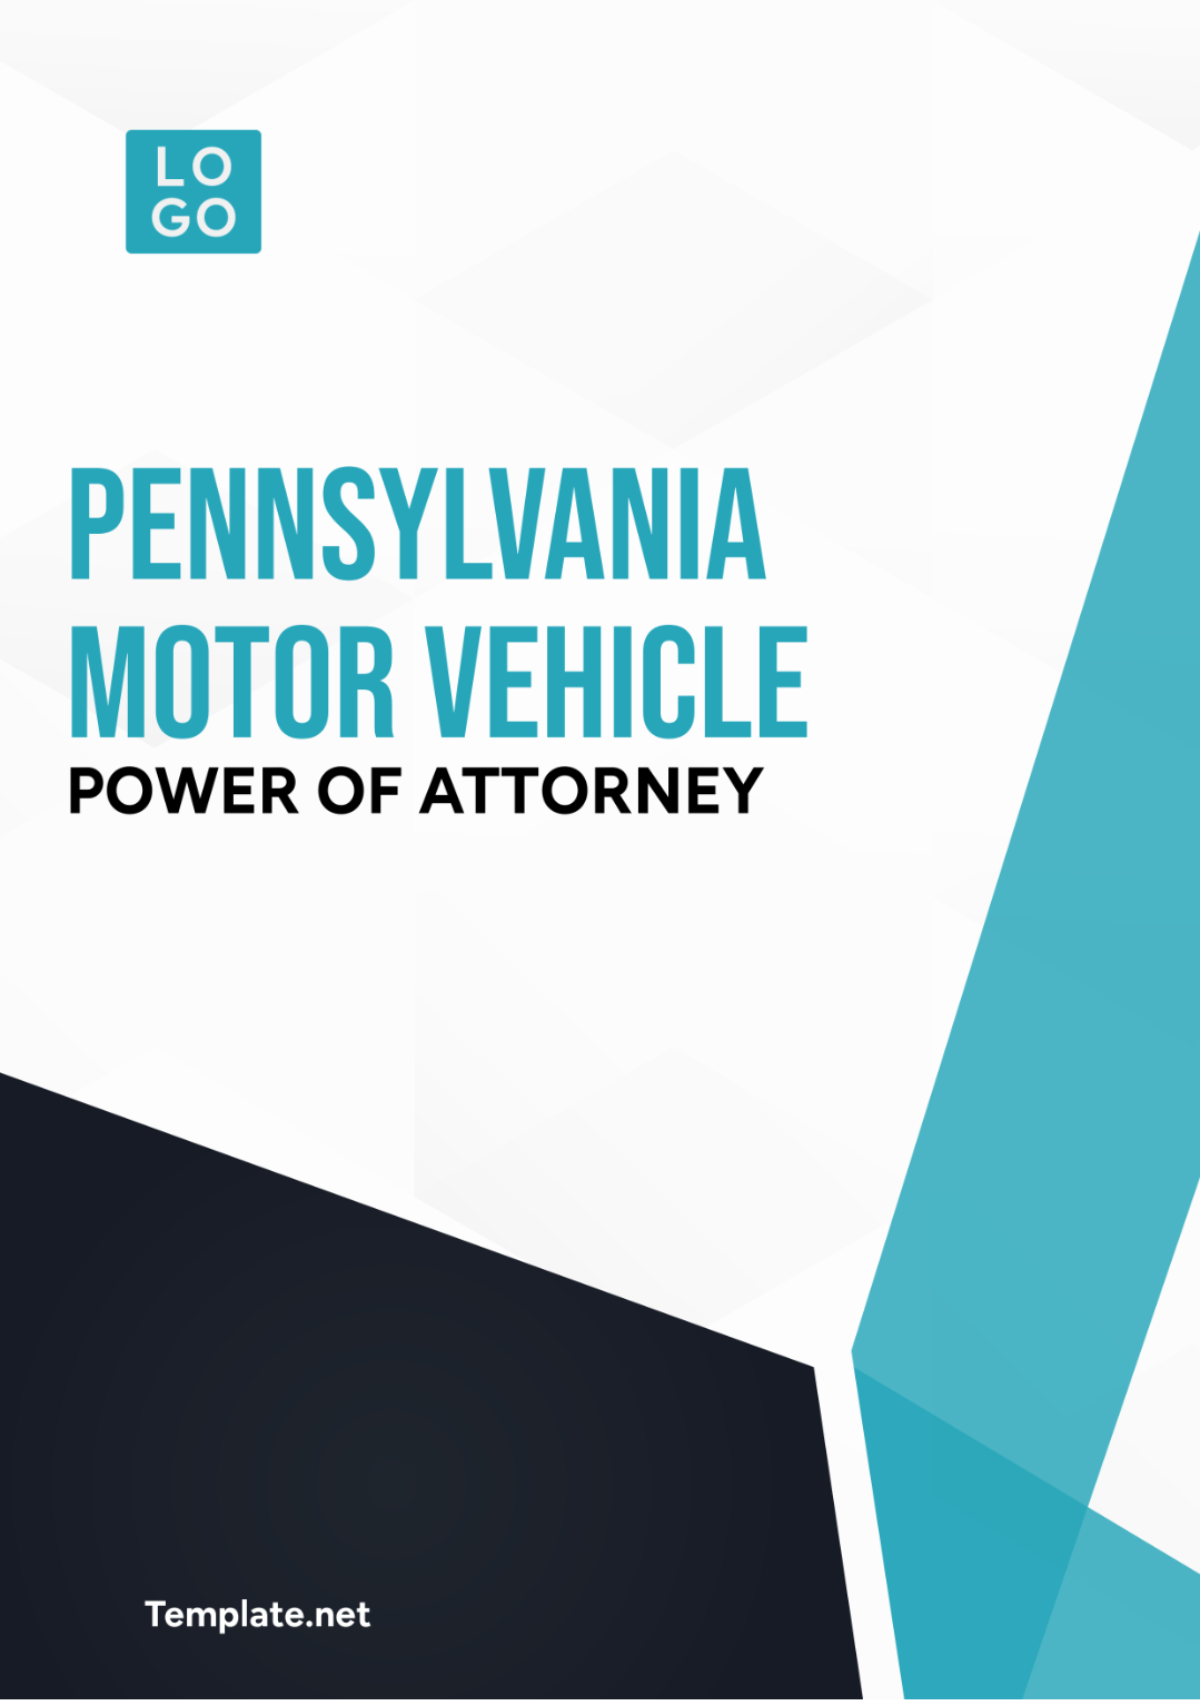 Pennsylvania Motor Vehicle Power of Attorney Template